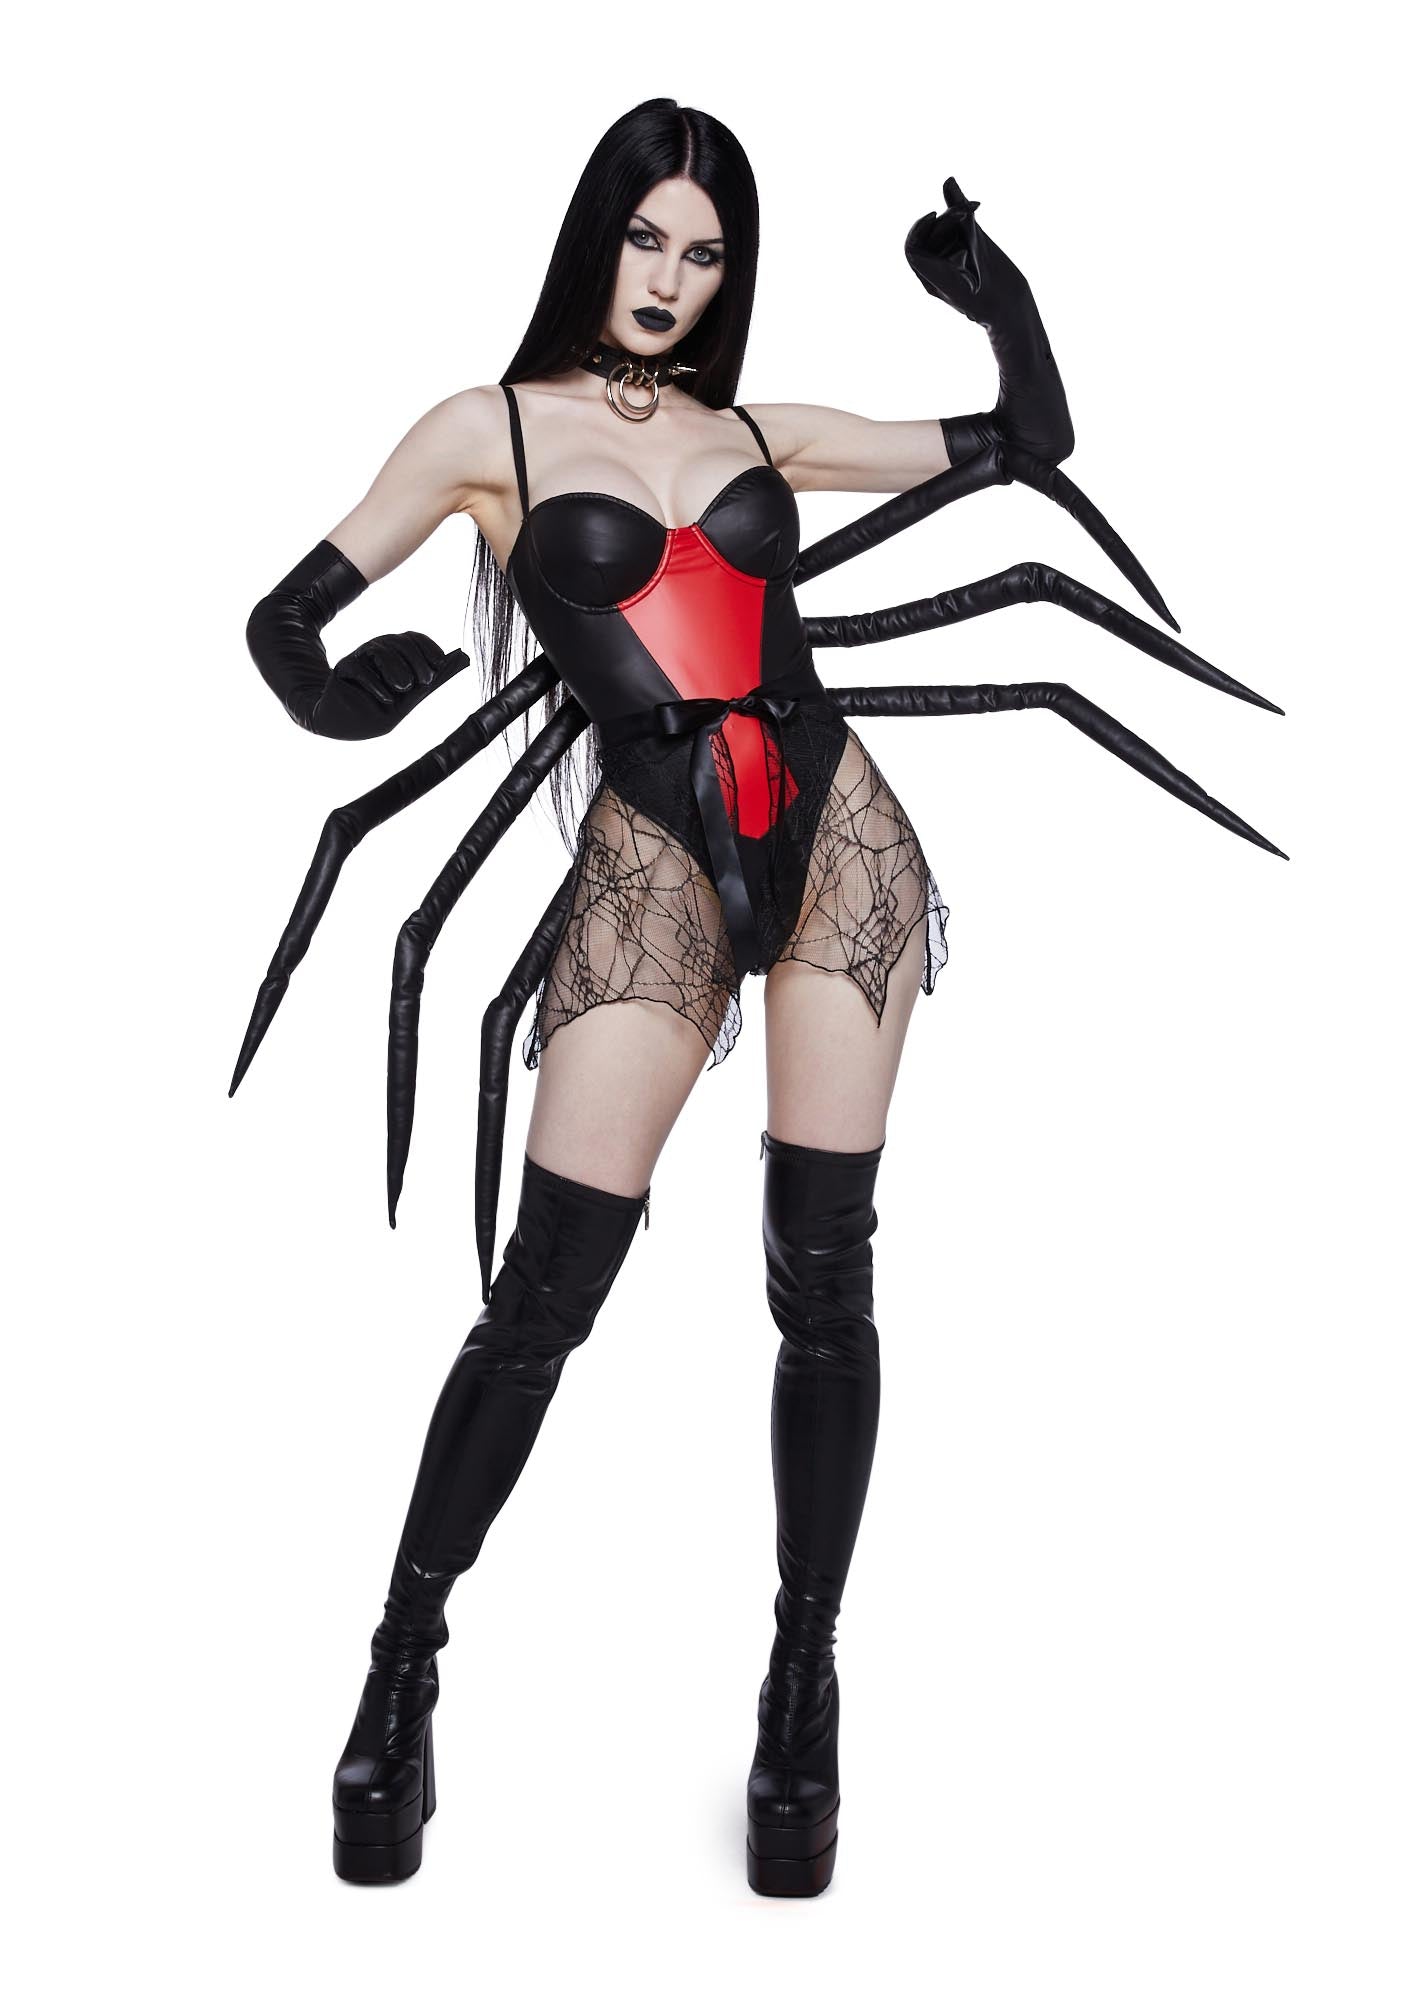 Spider girl🕷  Spider woman costumes, Halloween outfits, Halloween costume  outfits